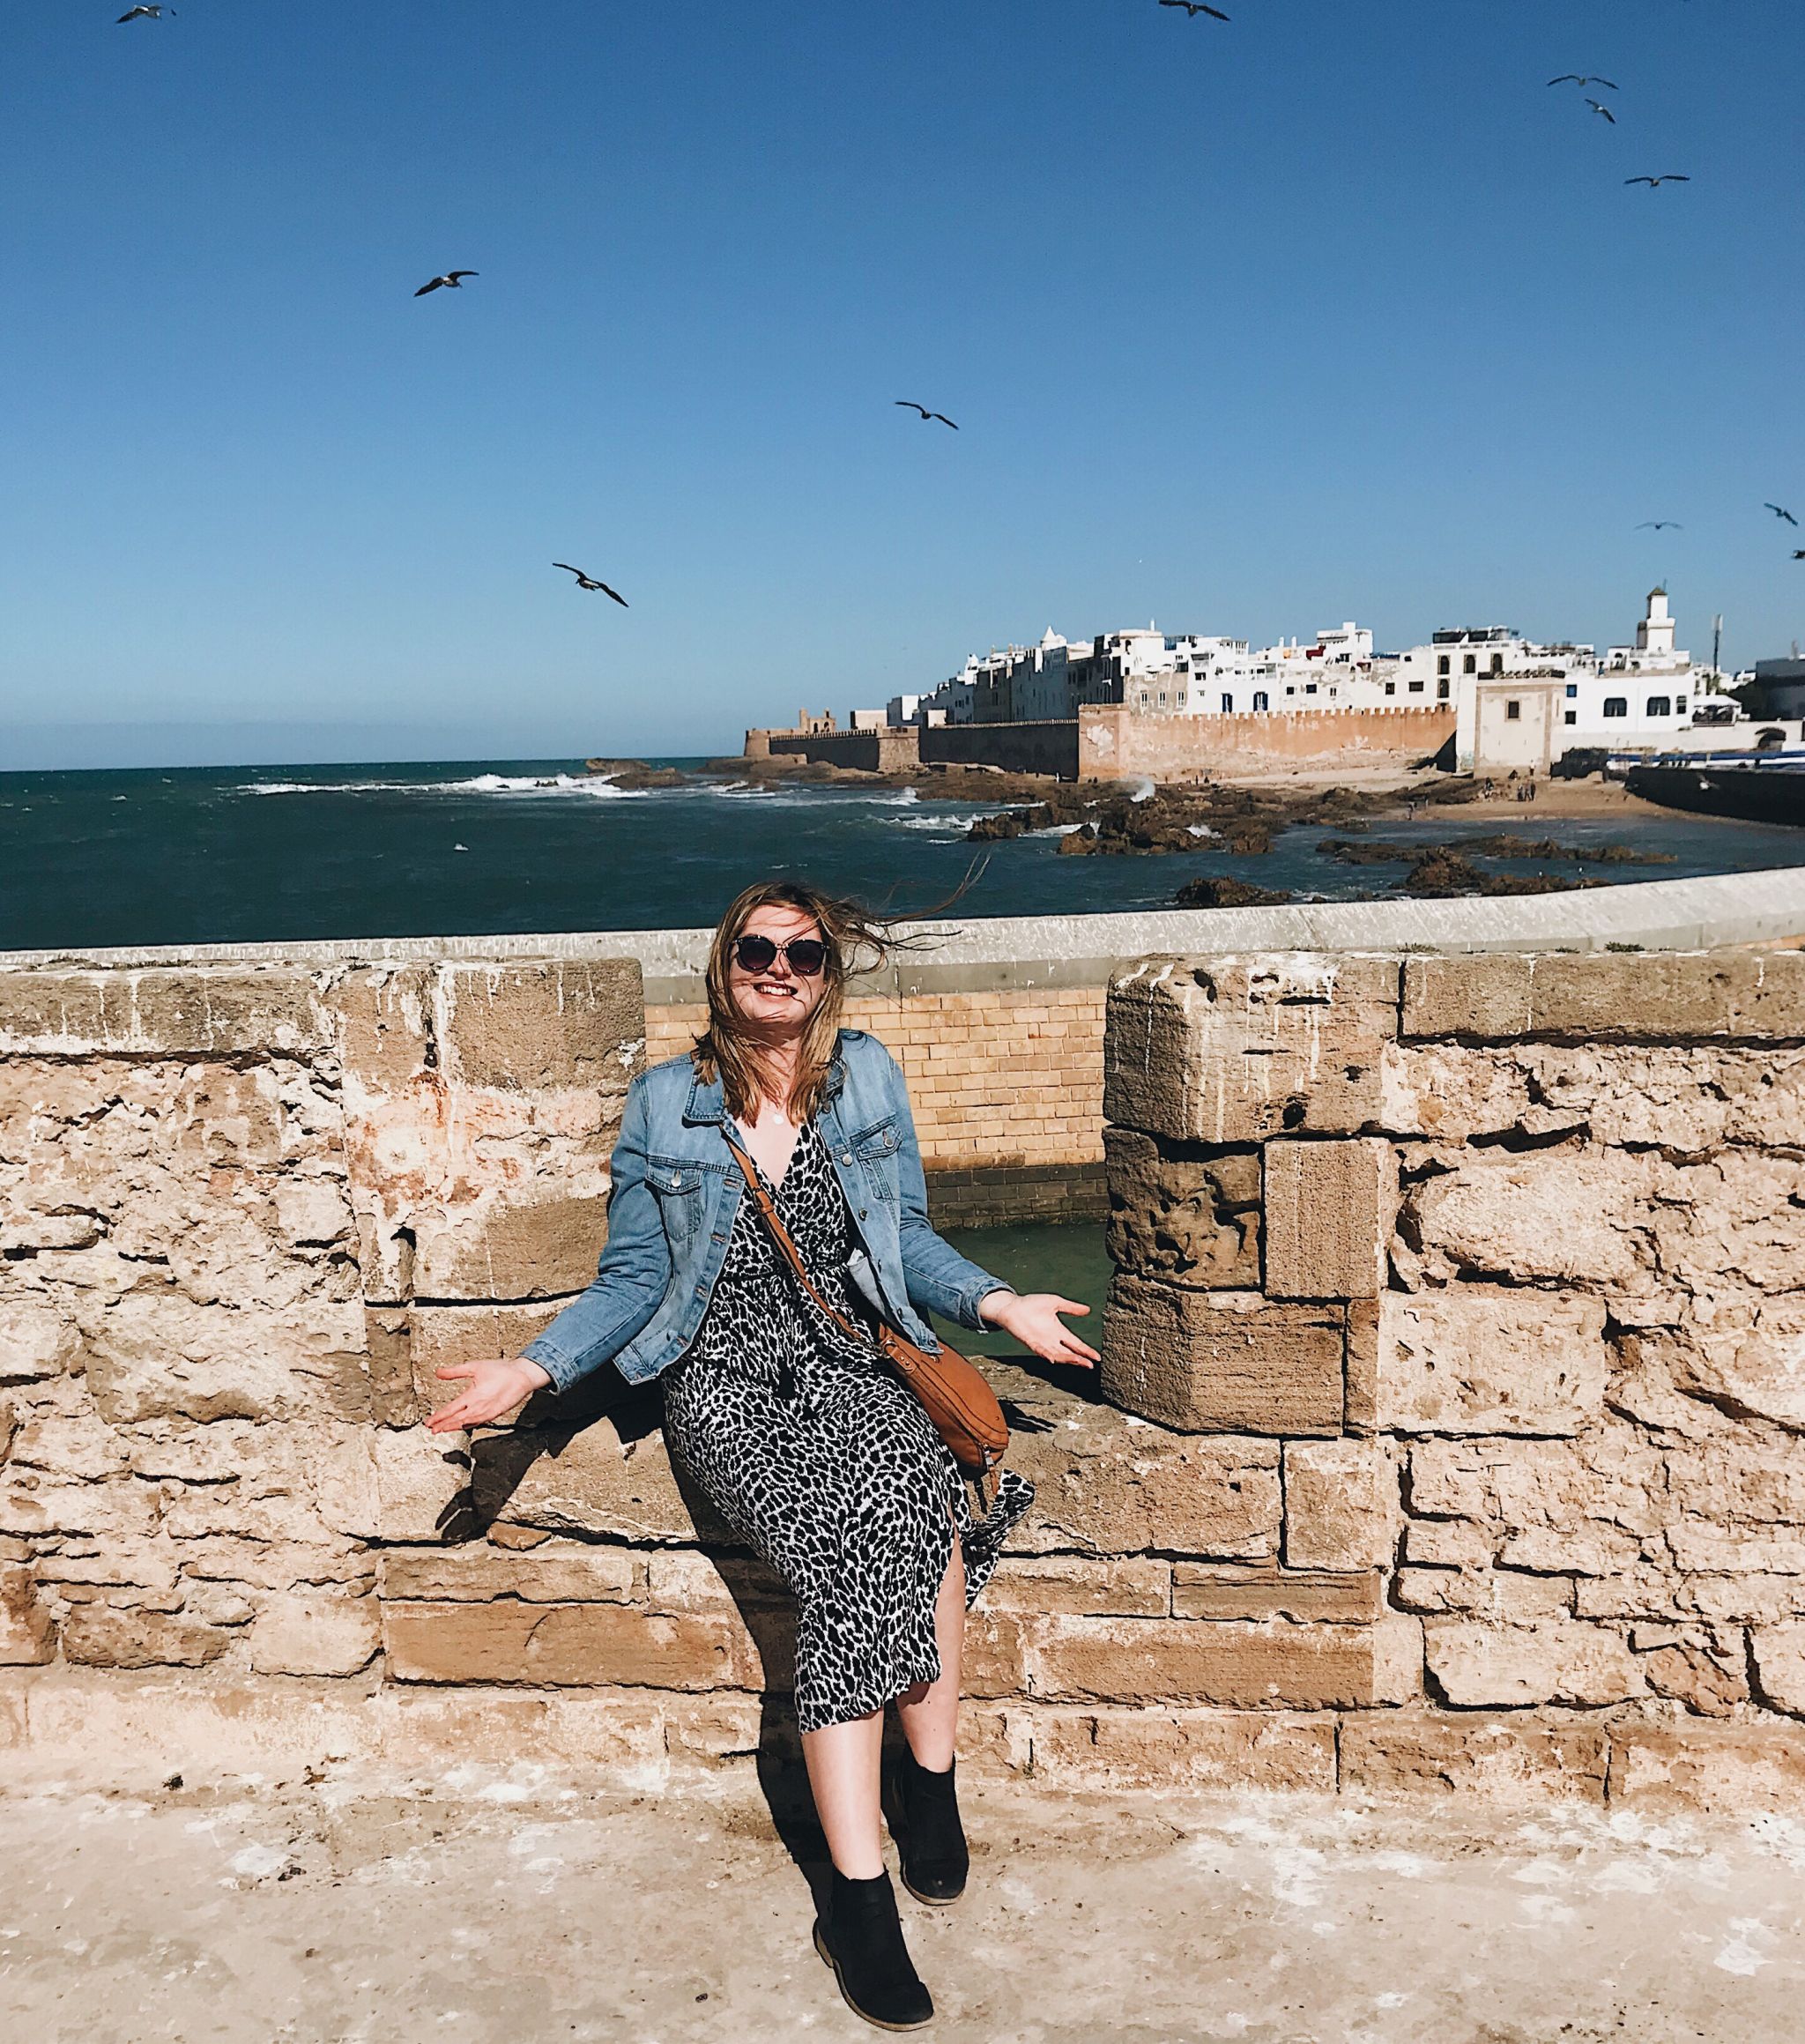 one week in morocco itinerary: Essaouira